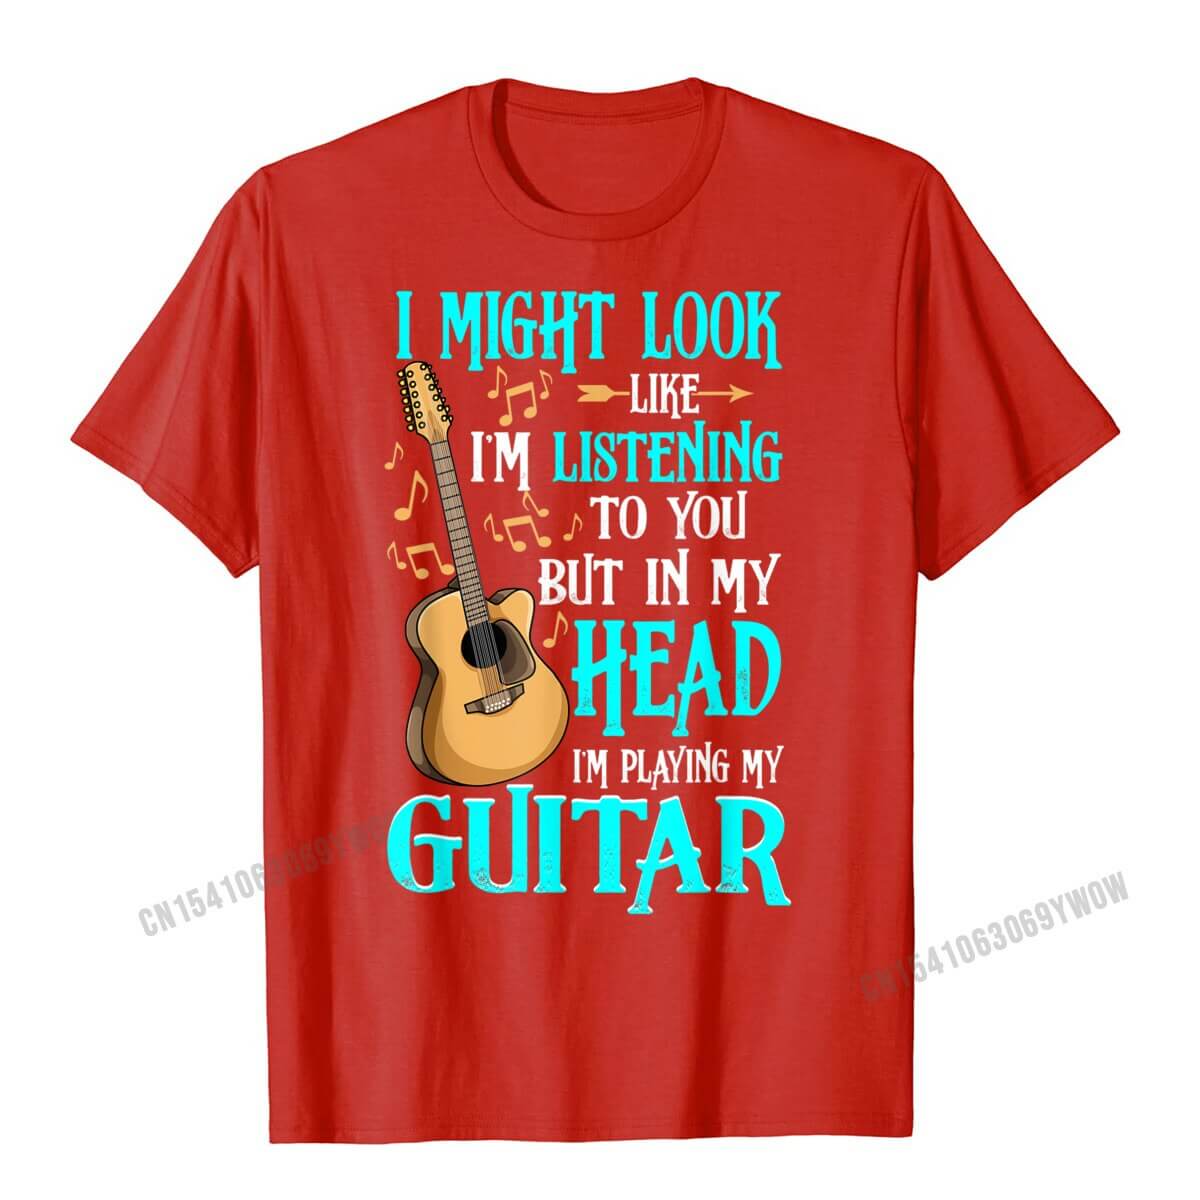 Unique and funny guitar print t-shirt Red guitarmetrics